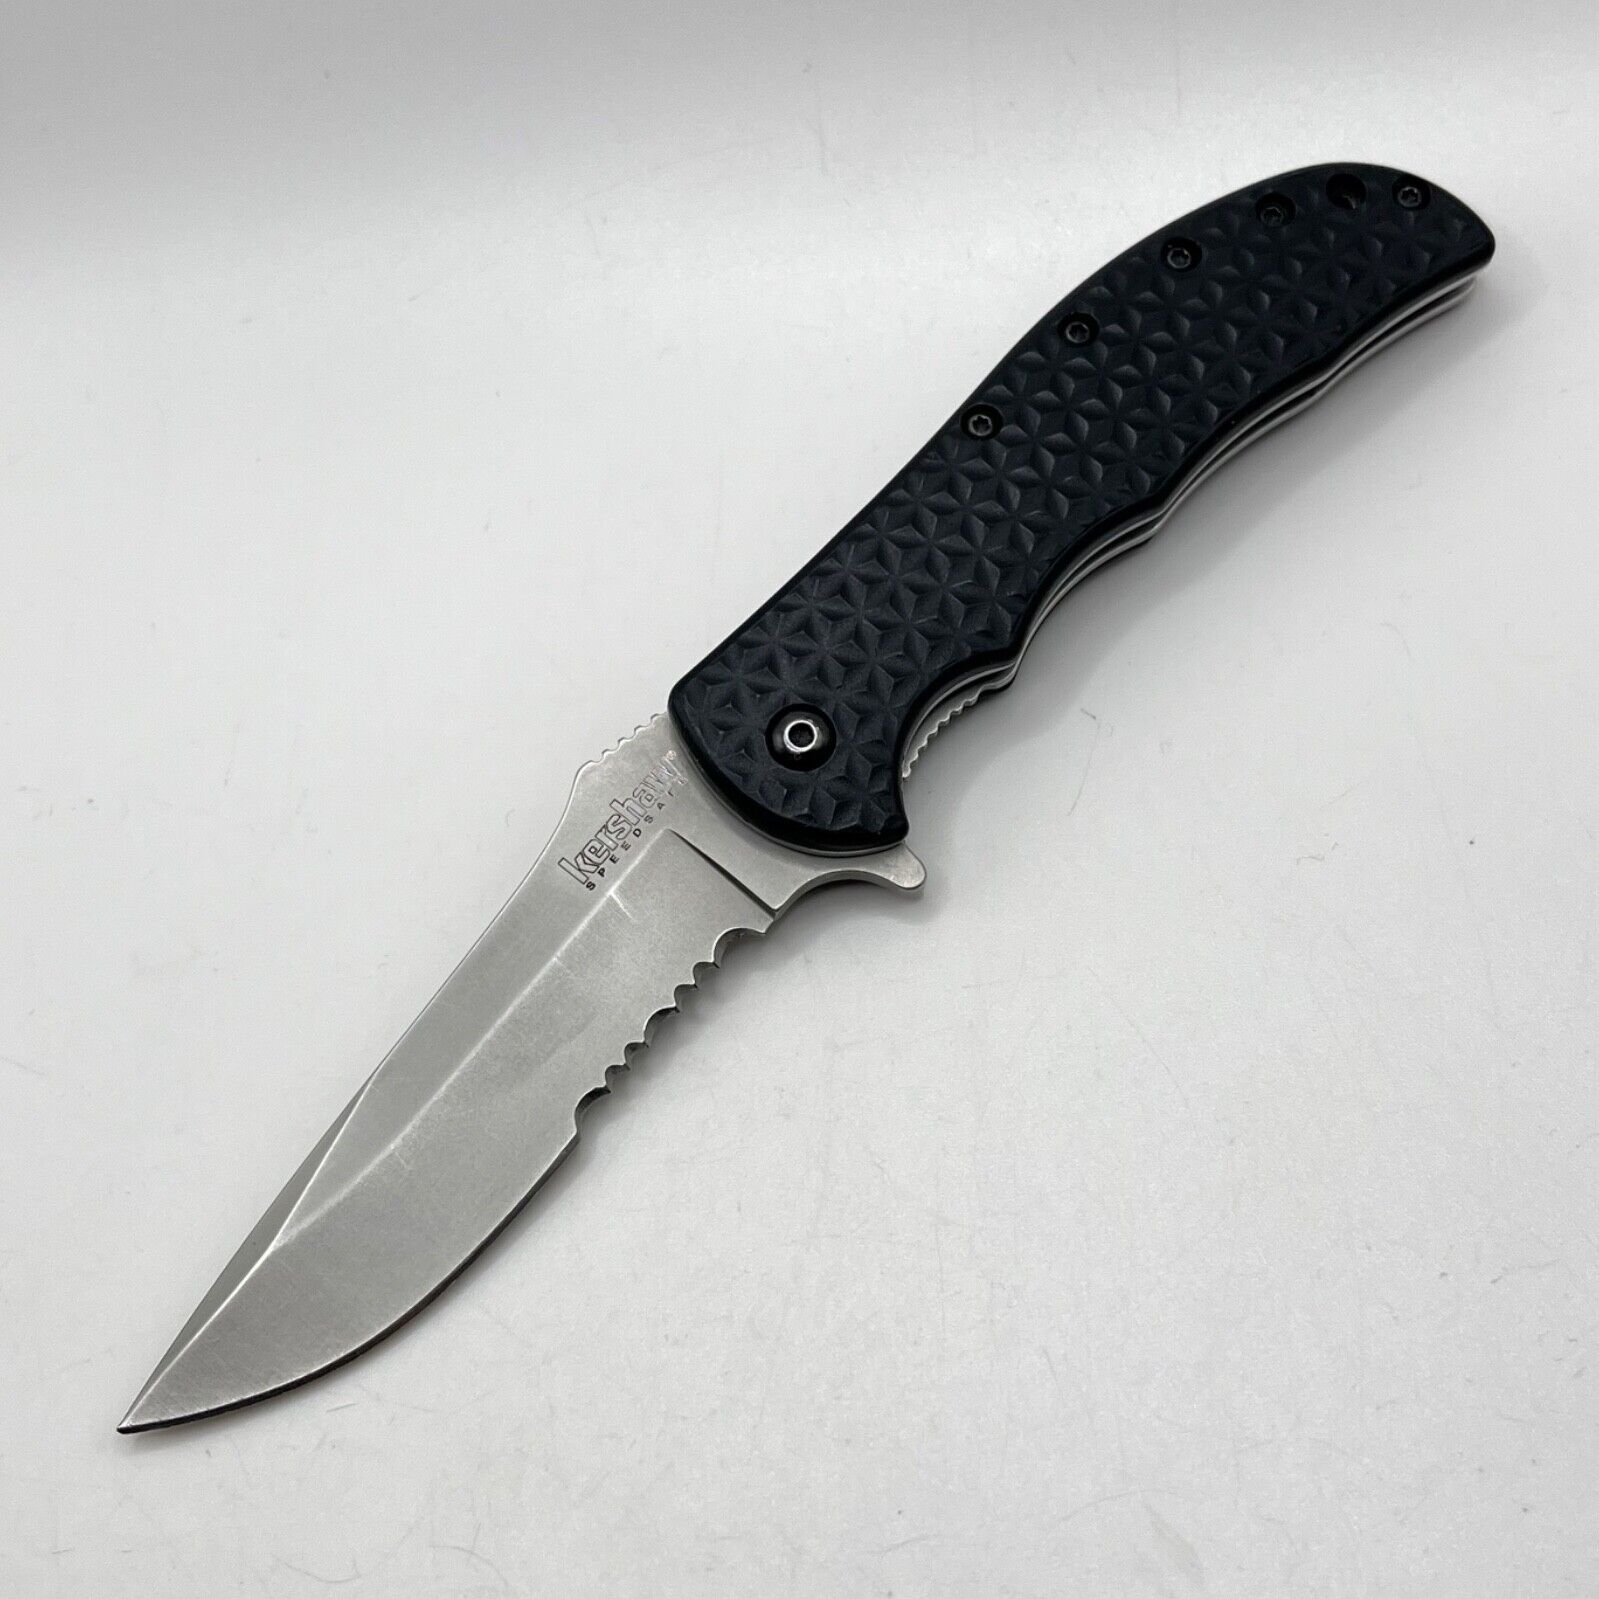 Kershaw Volt II 3650ST Pocket Knife Assisted RJ Martin 3650 Combo Edge Blade